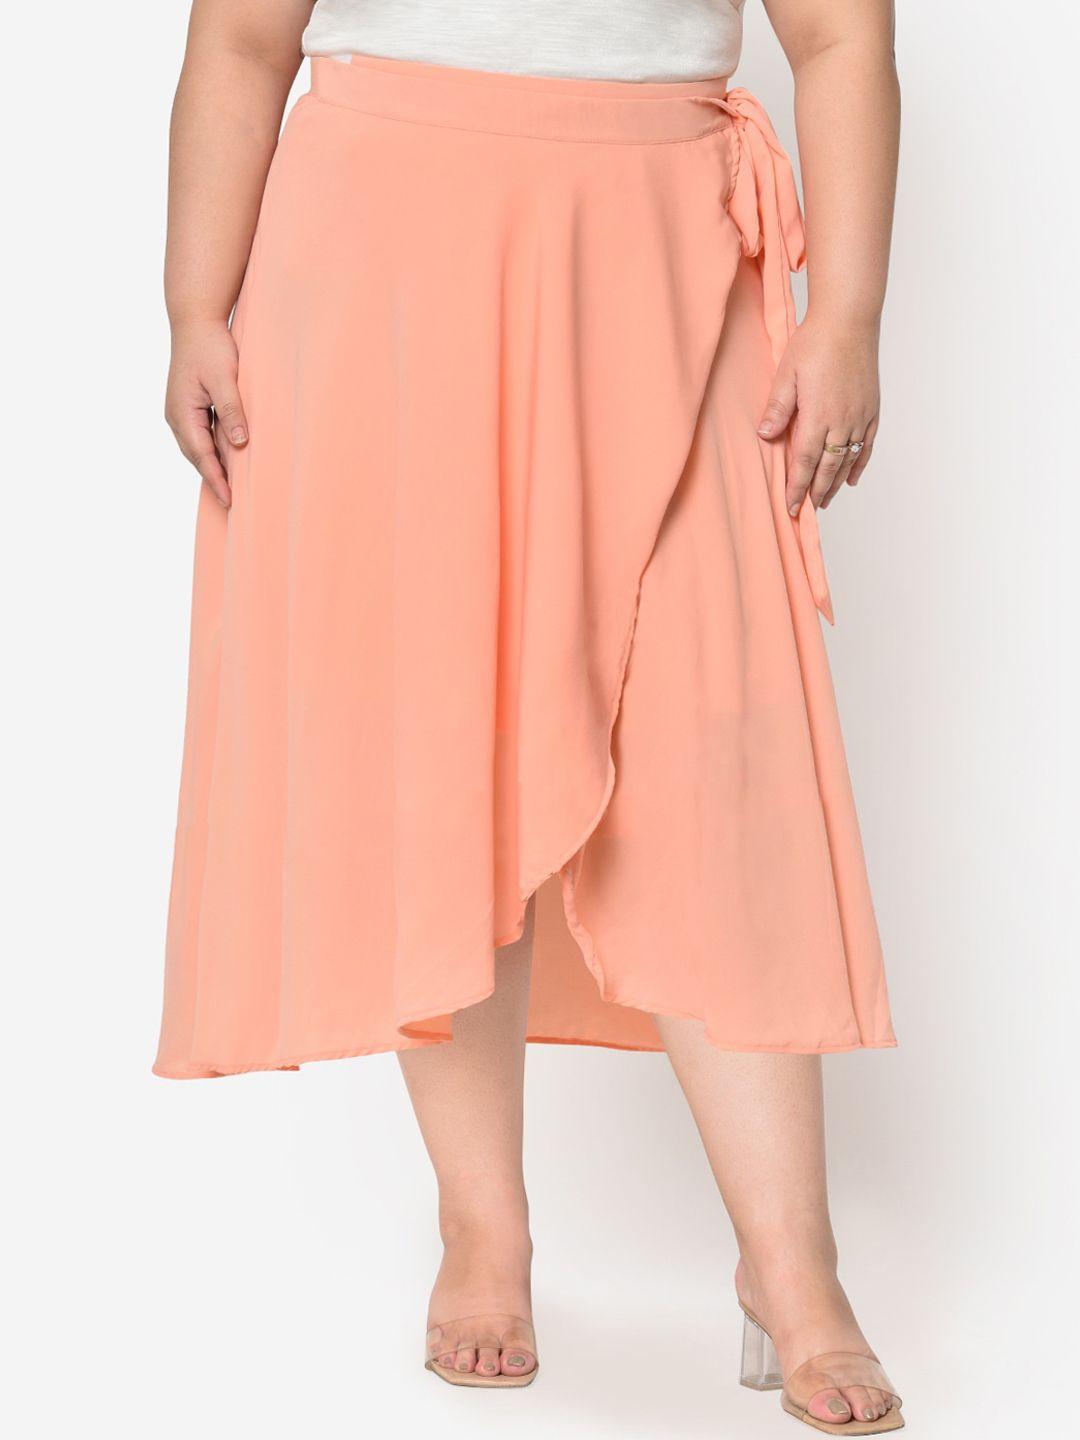 wild u women peach-coloured solid wrap plus size midi skirt